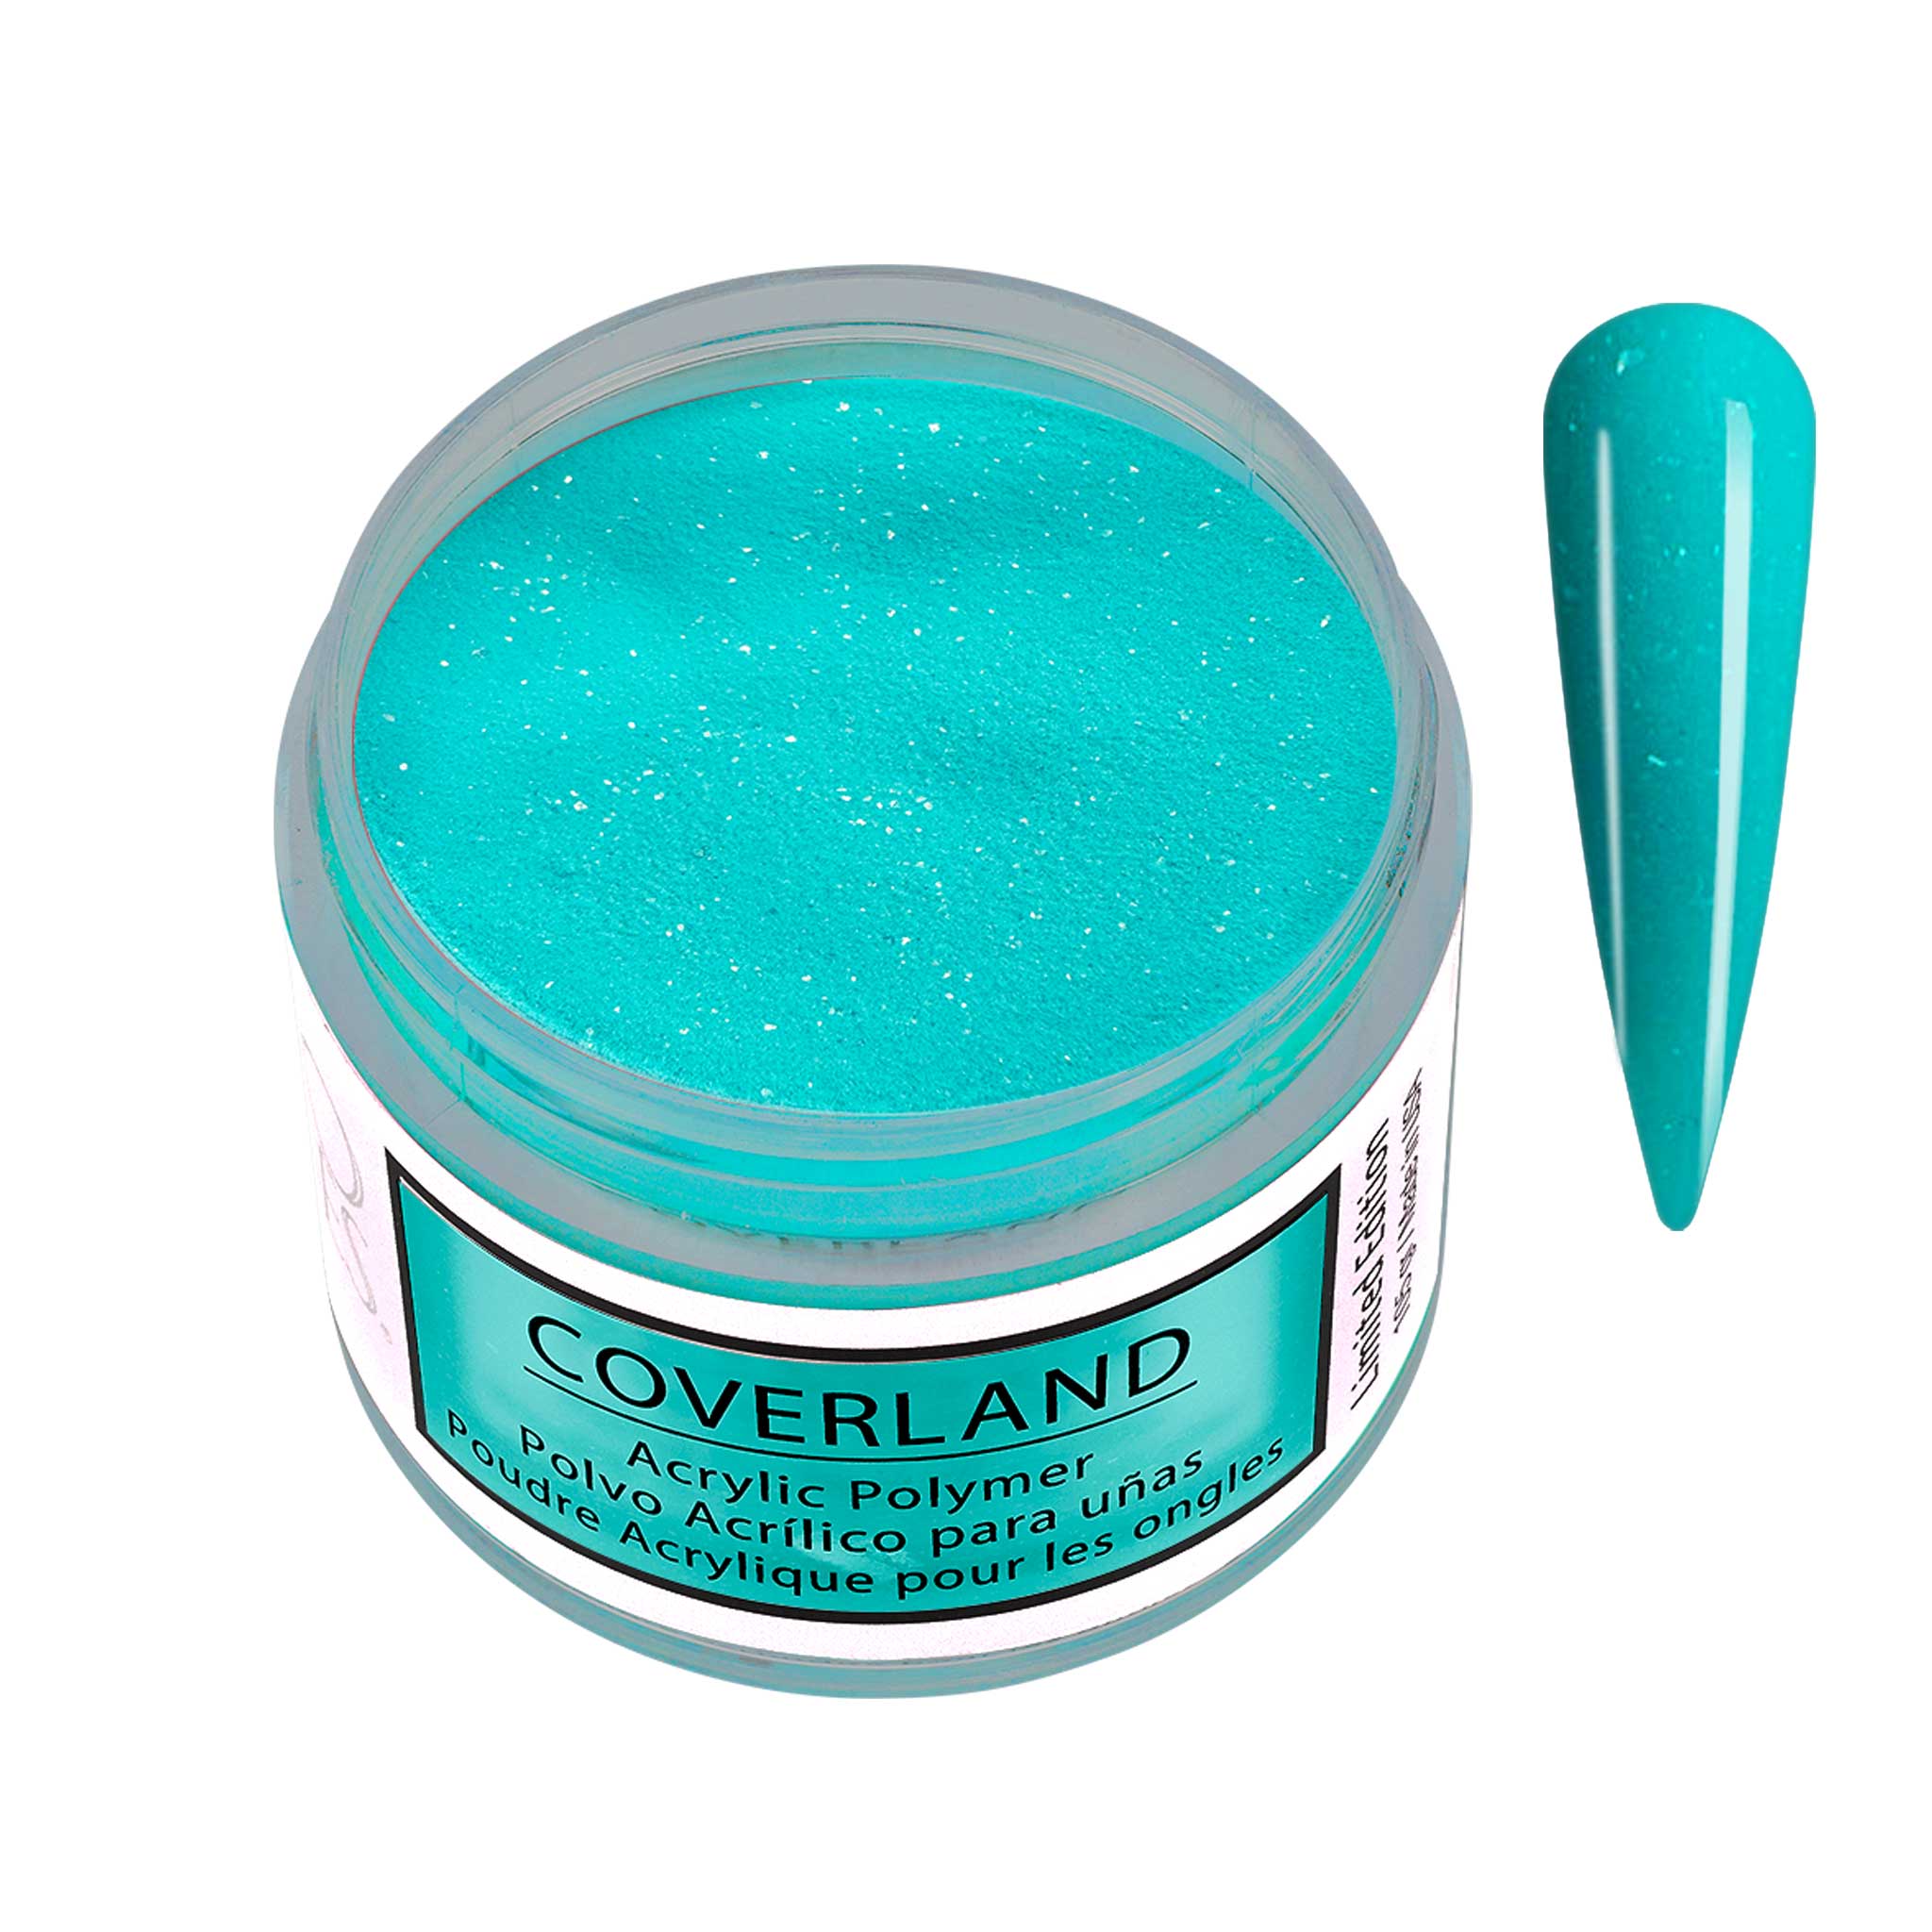 Coverland Acrylic Powder 1.5 oz 